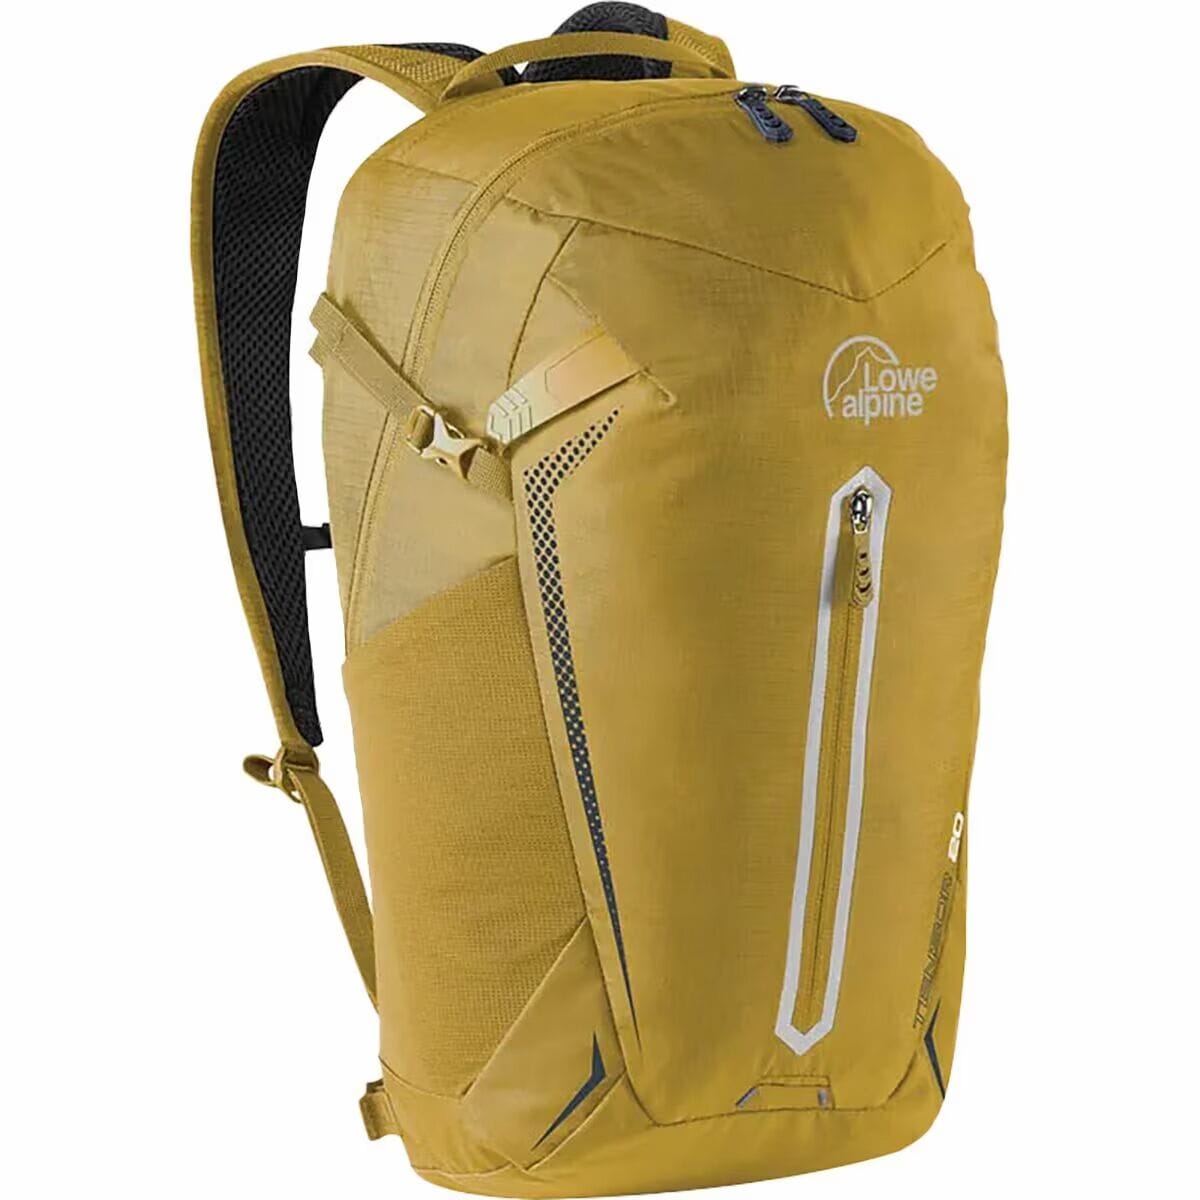 Lowe Alpine Tensor 20 Backpack - Accessories